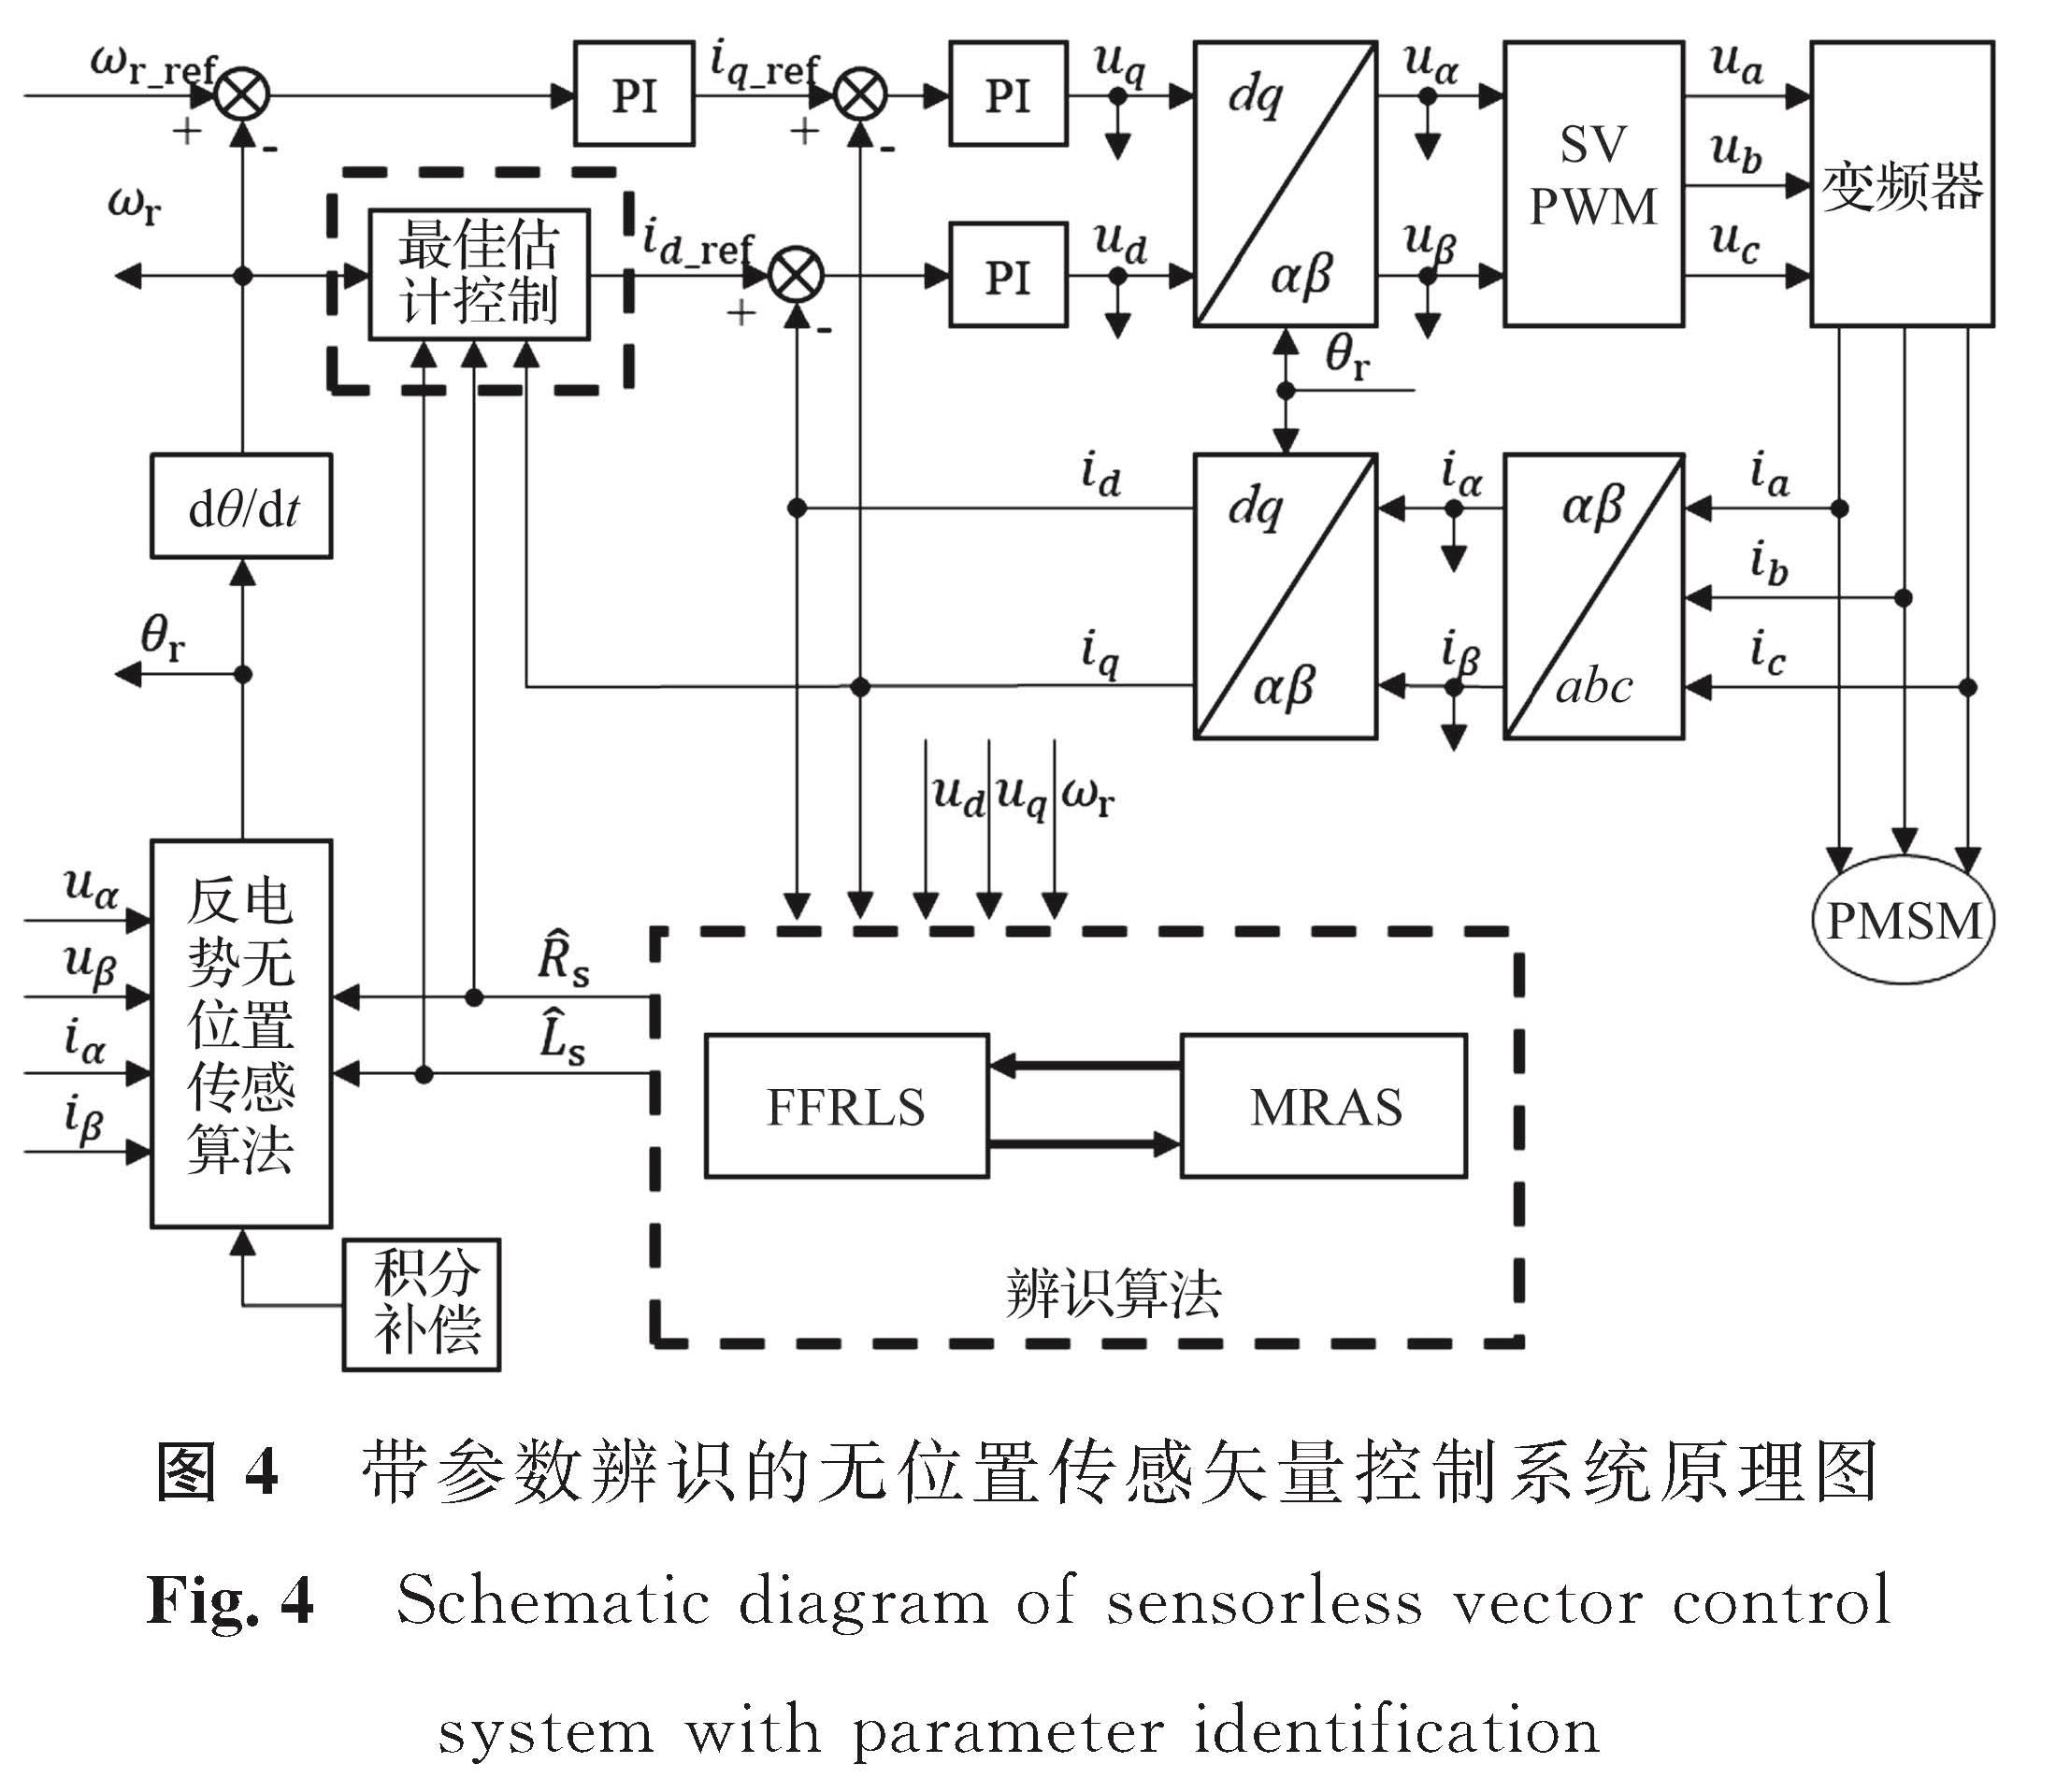 图4 带参数辨识的无位置传感矢量控制系统原理图<br/>Fig.4 Schematic diagram of sensorless vector control system with parameter identification